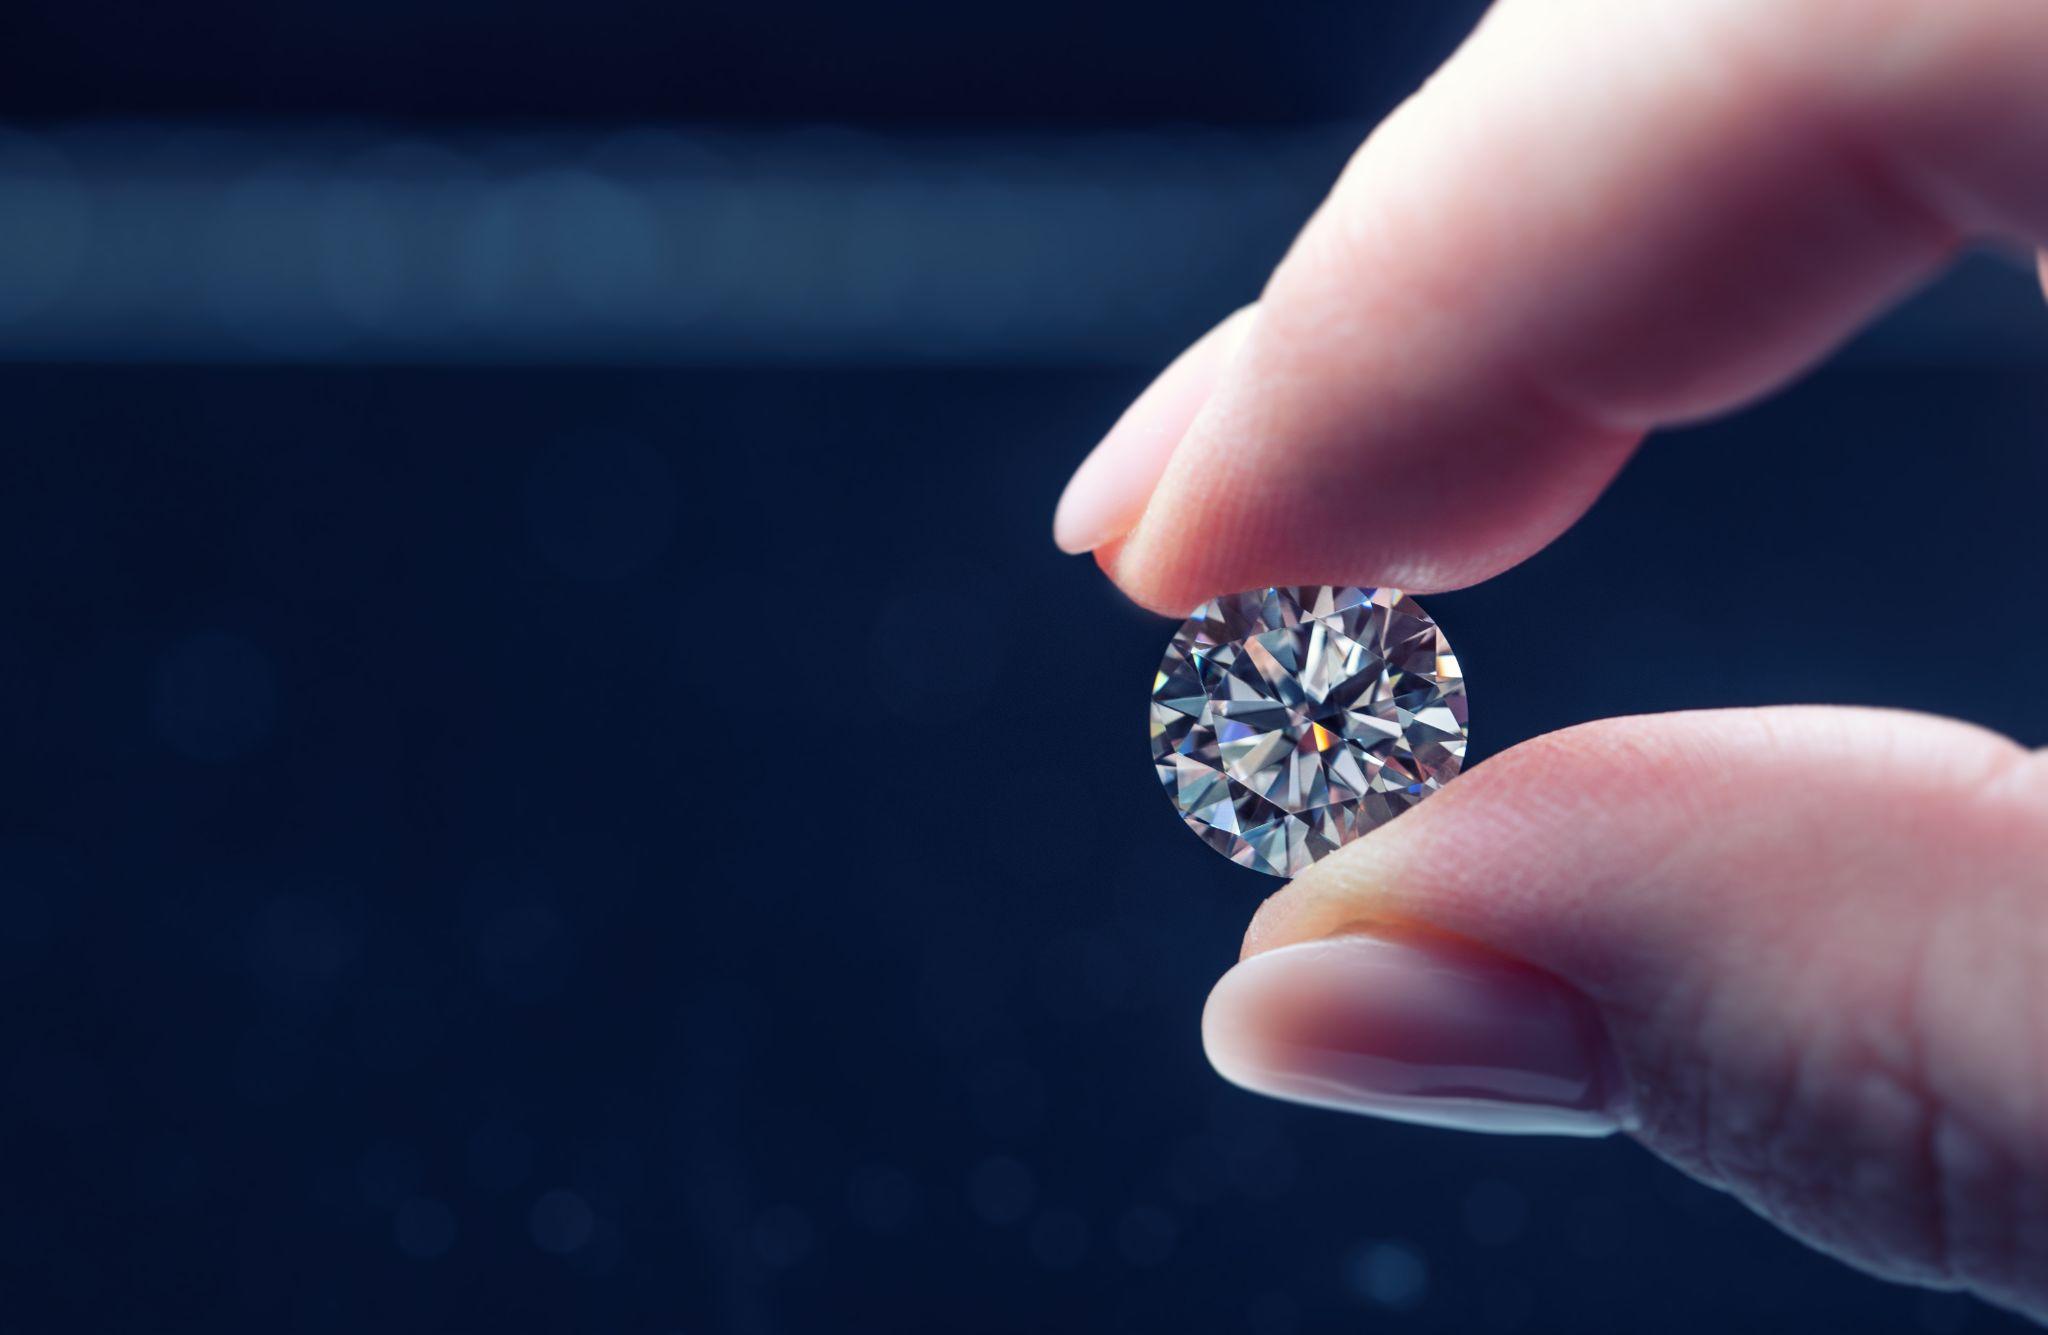 Female hand holding diamond